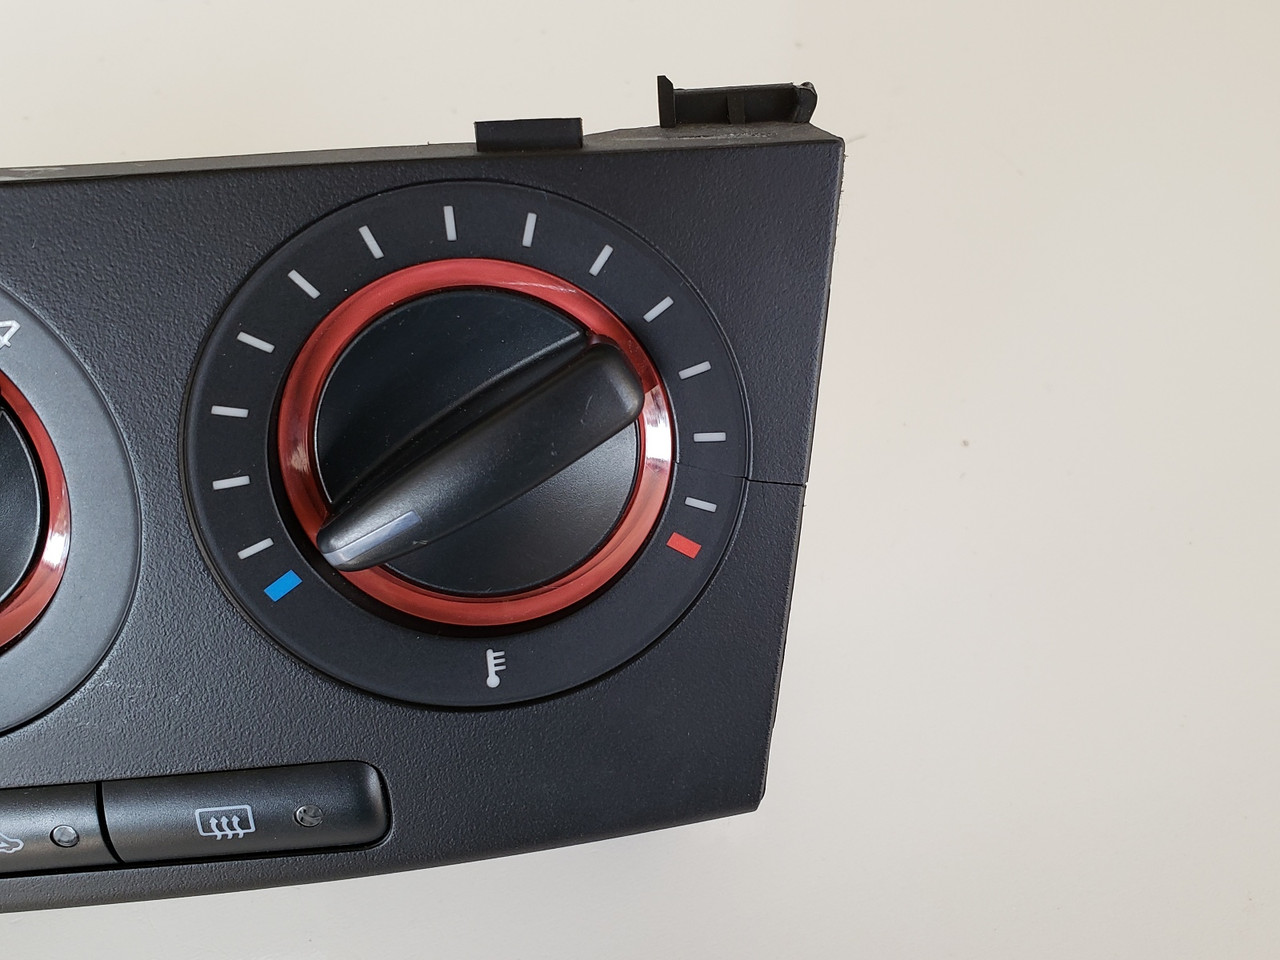 04-06 Mazda 3 BN8L61190A Climate Control Panel Temperature Unit A/C Heater